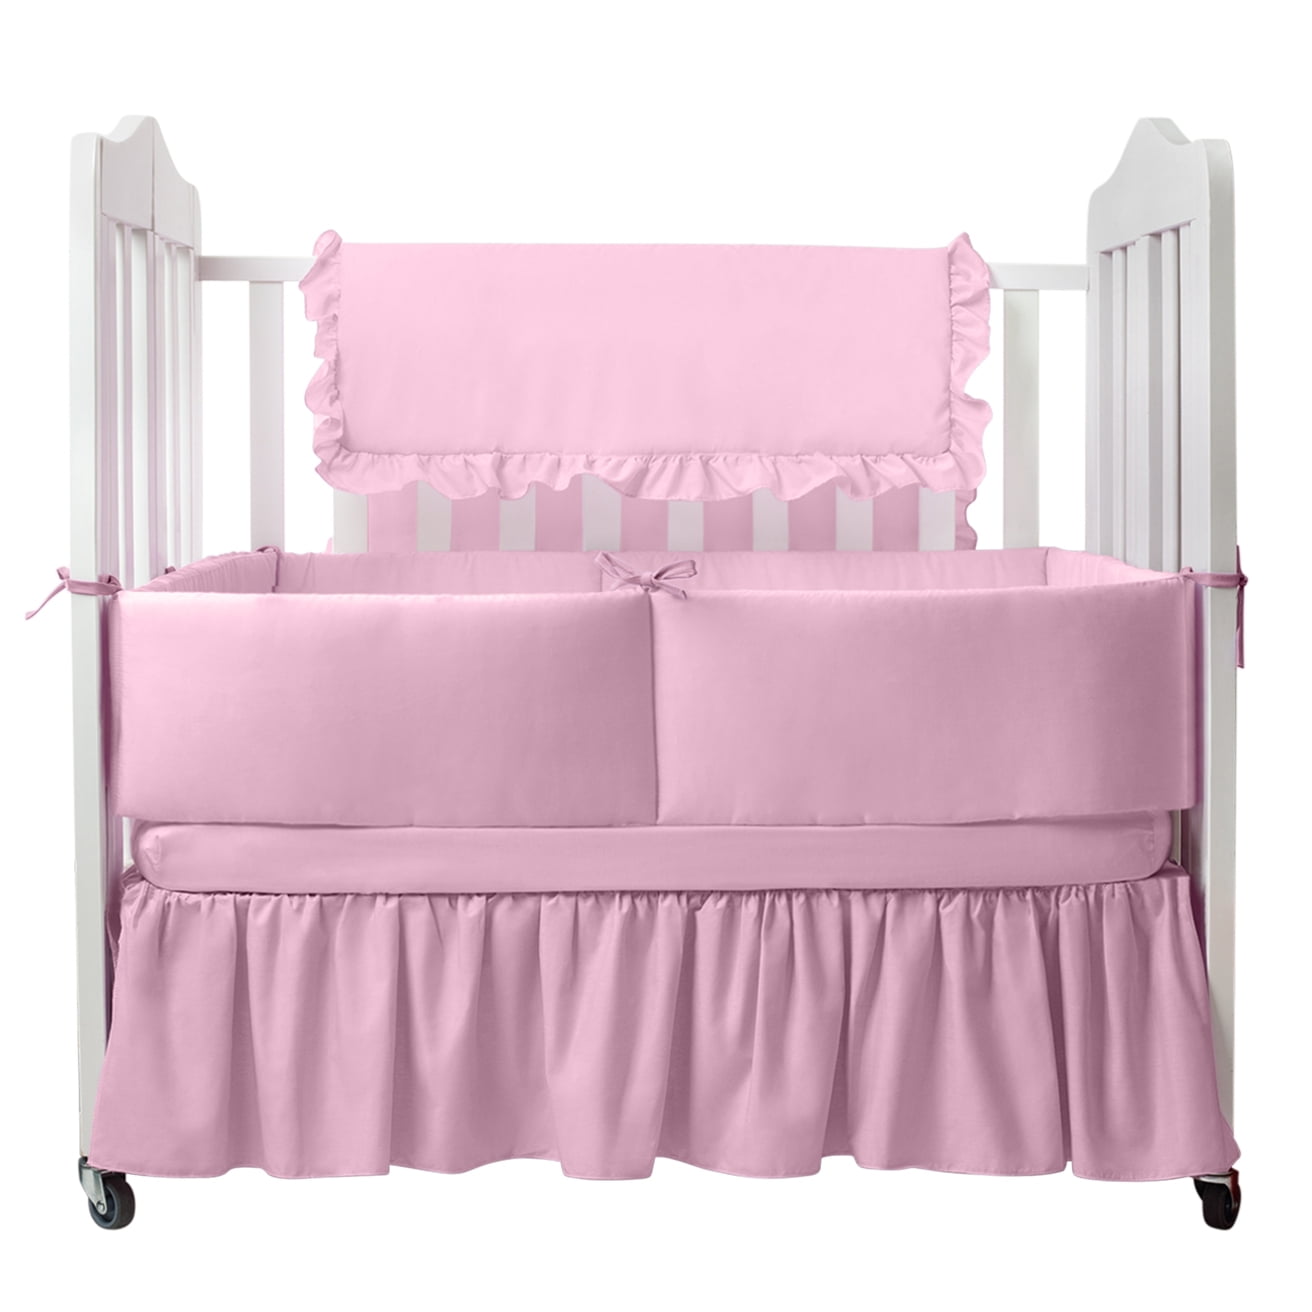 Solid Color Portable Crib Bedding - Walmart.com - Walmart.com